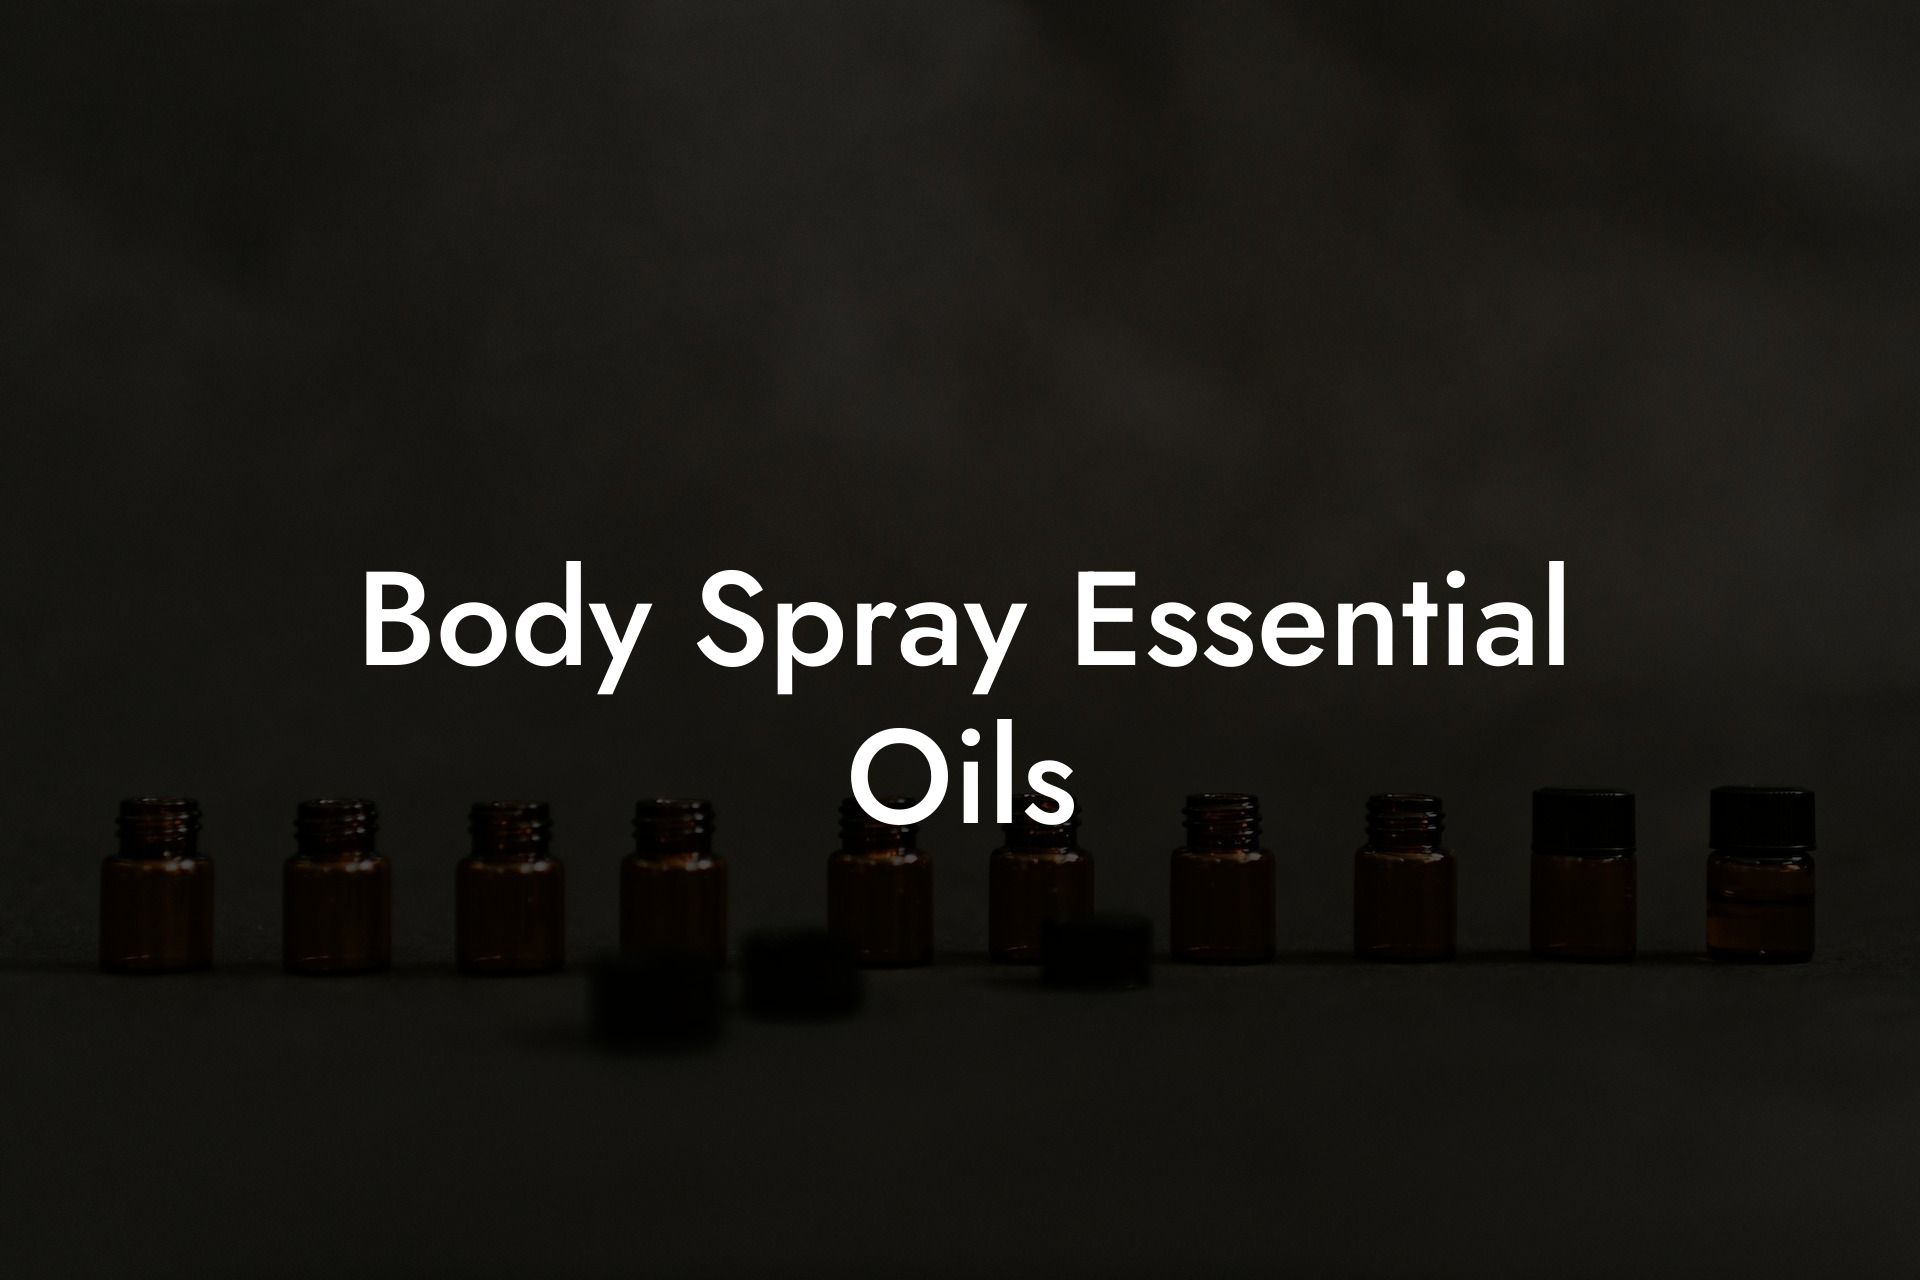 Body Spray Essential Oils